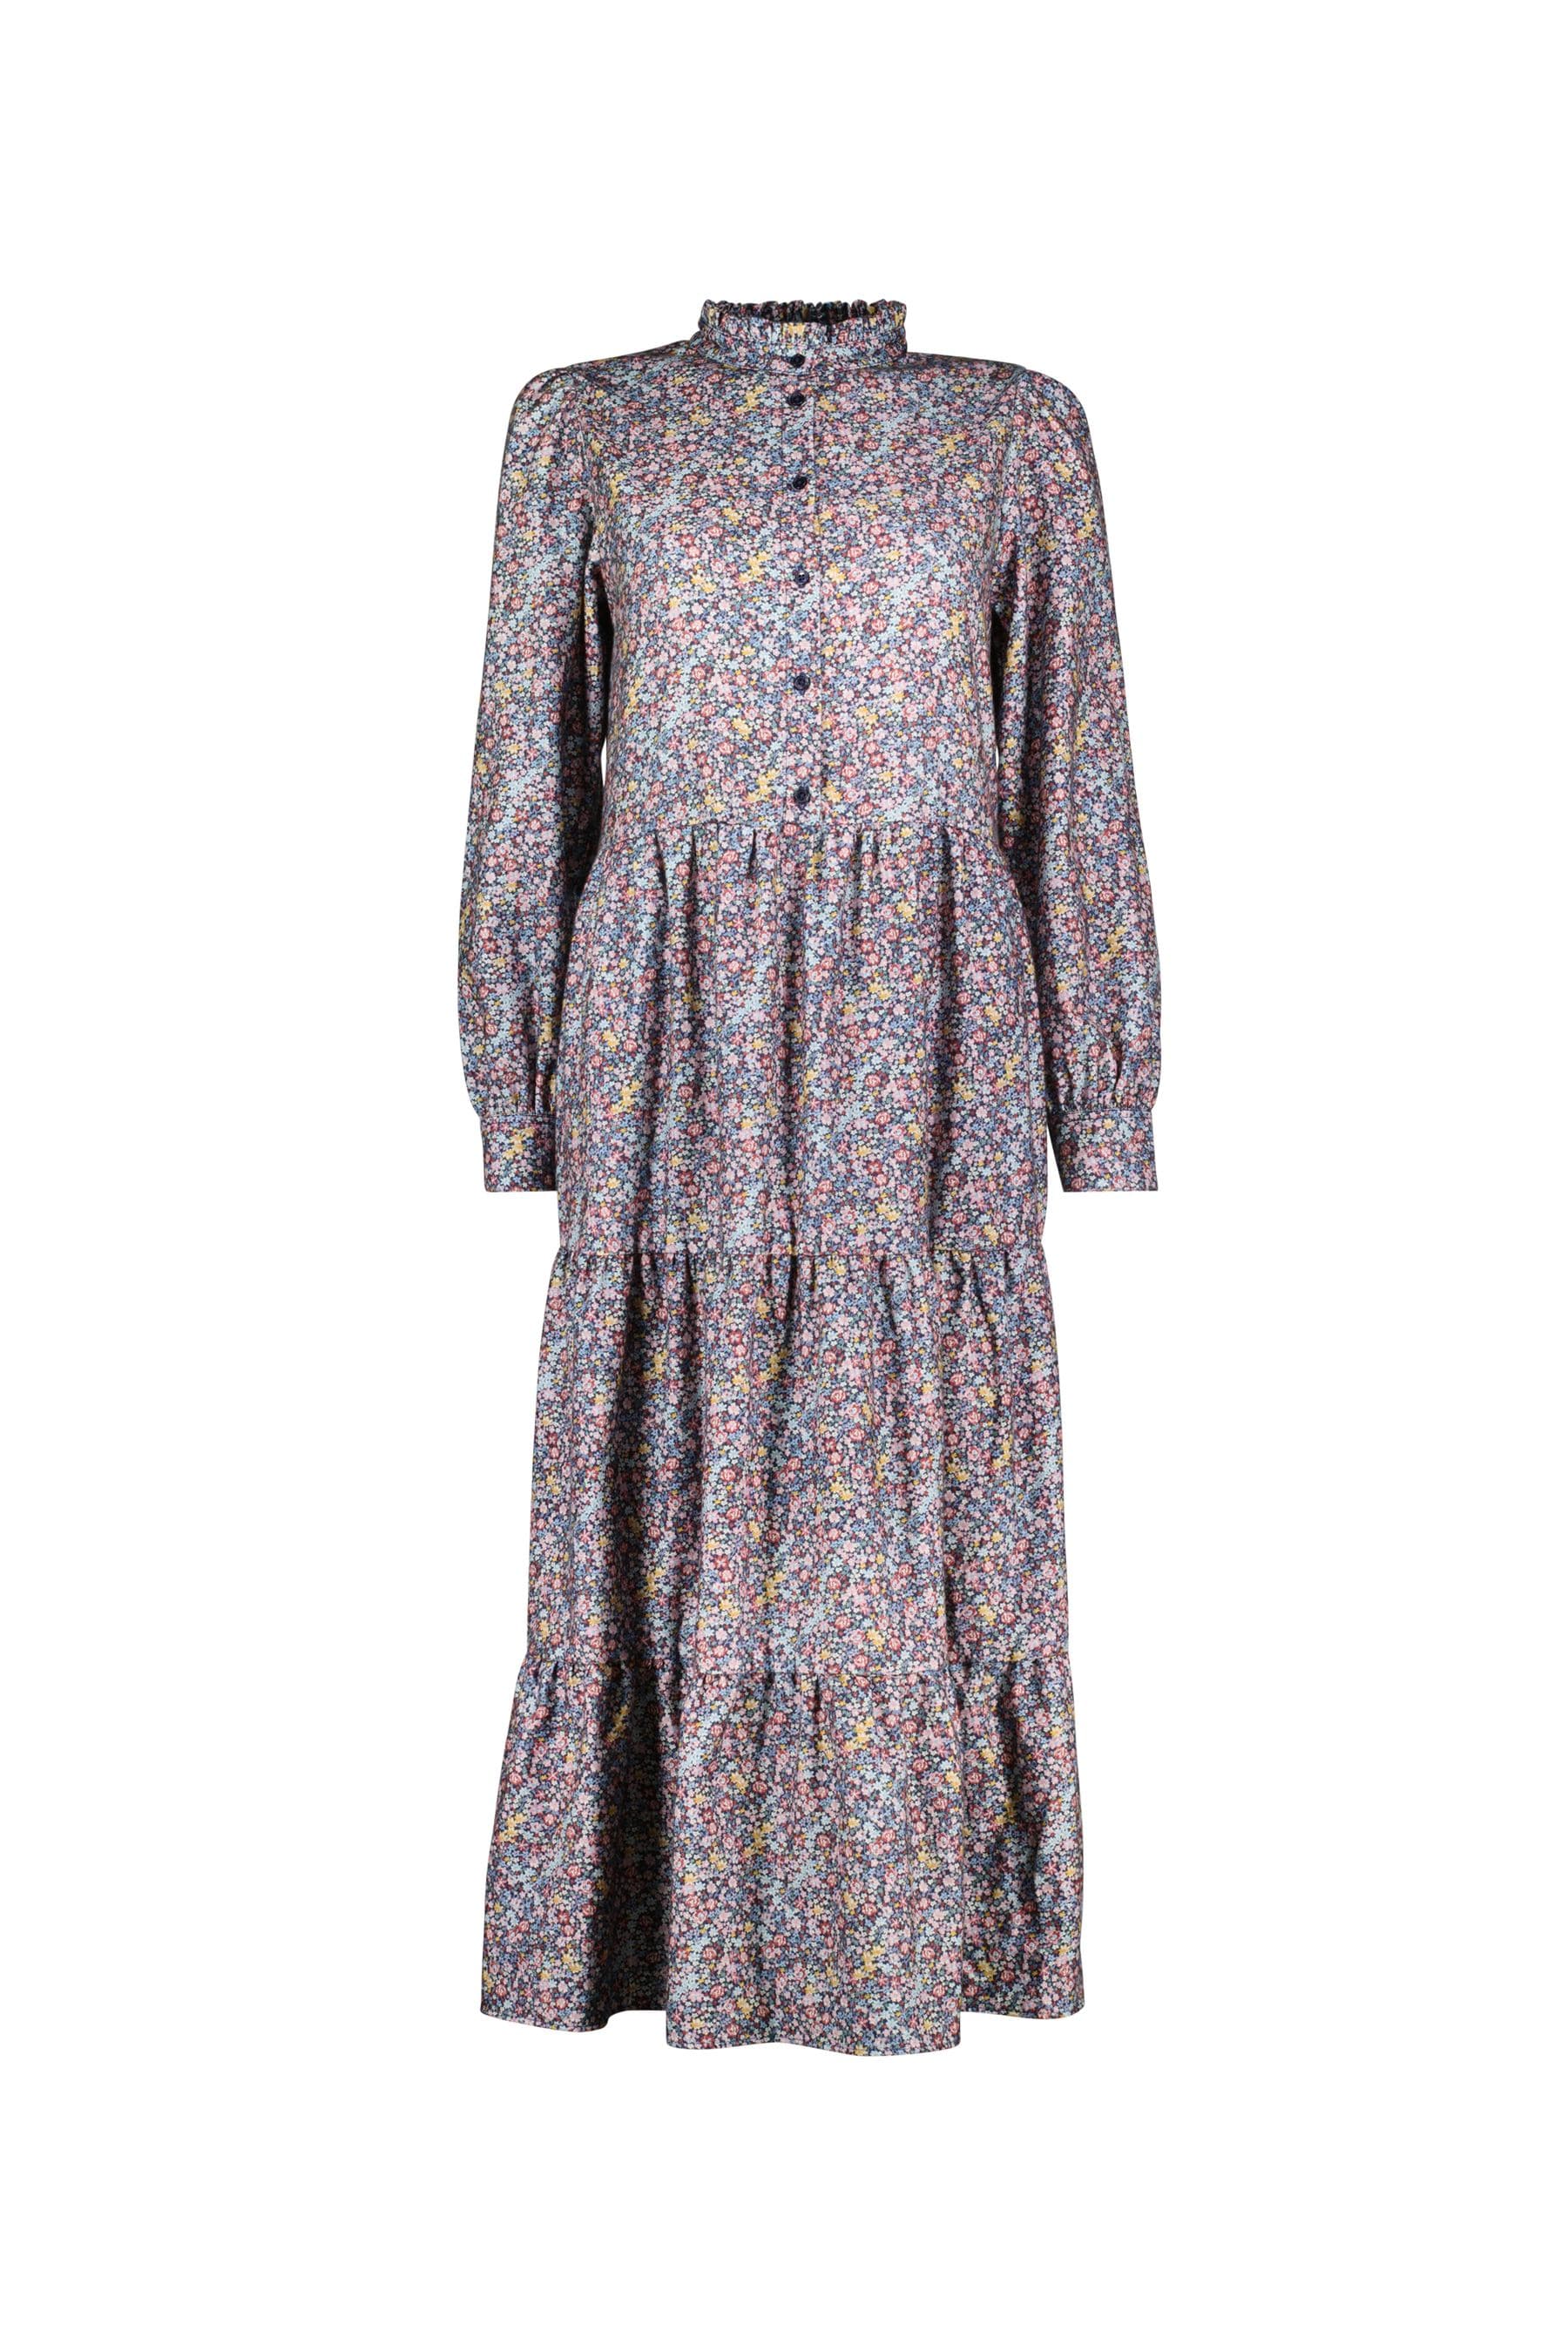 Buy Baukjen Blue Cadie Organic Dress from Next Ireland